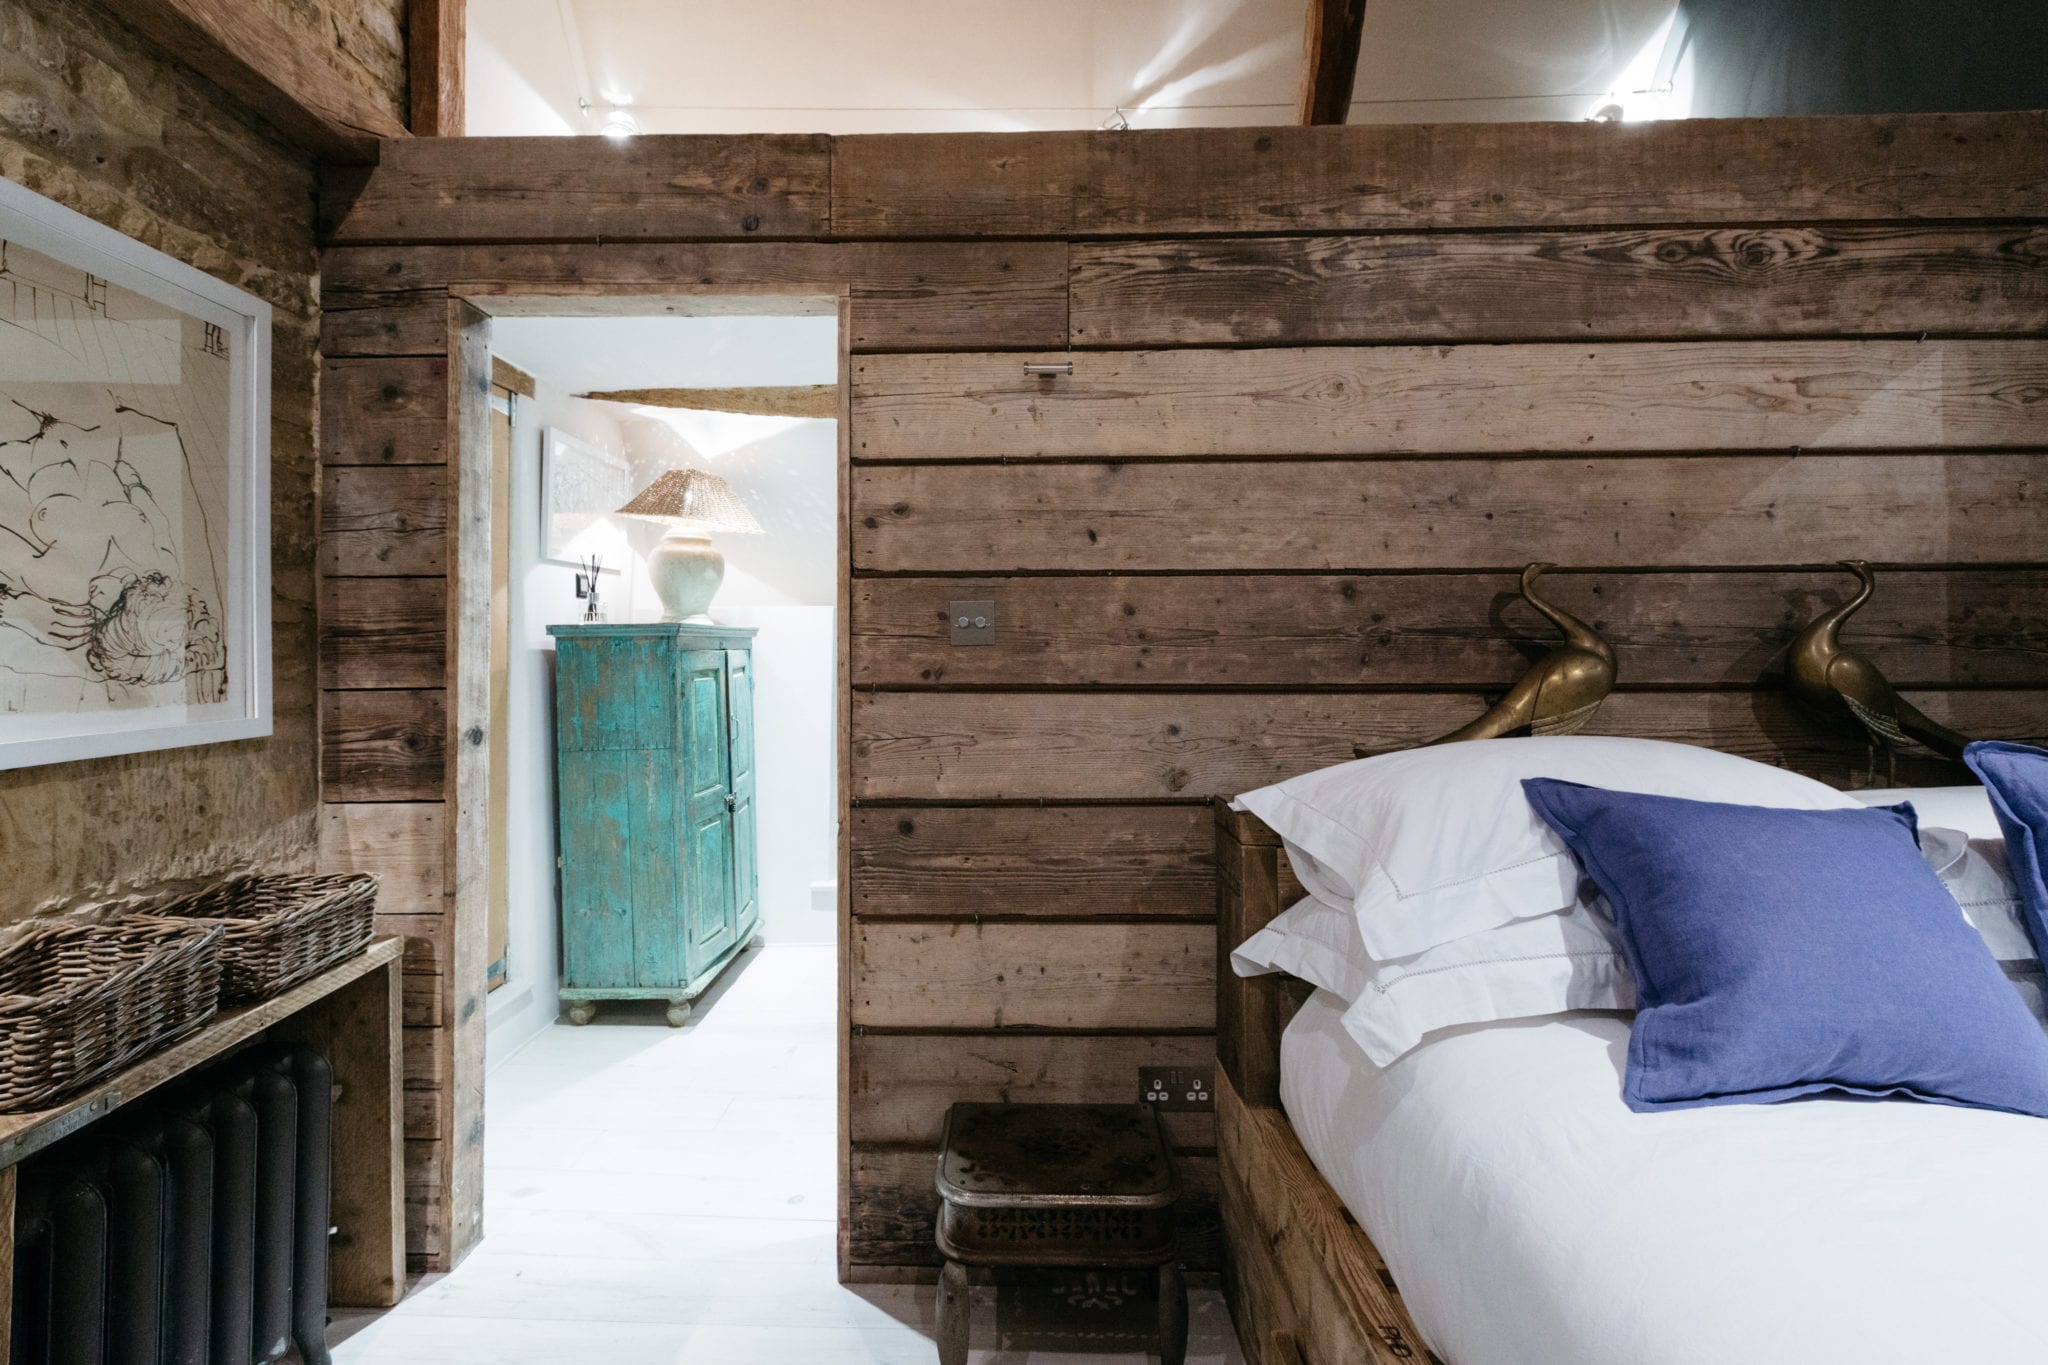 Bedroom with wooden clad walls